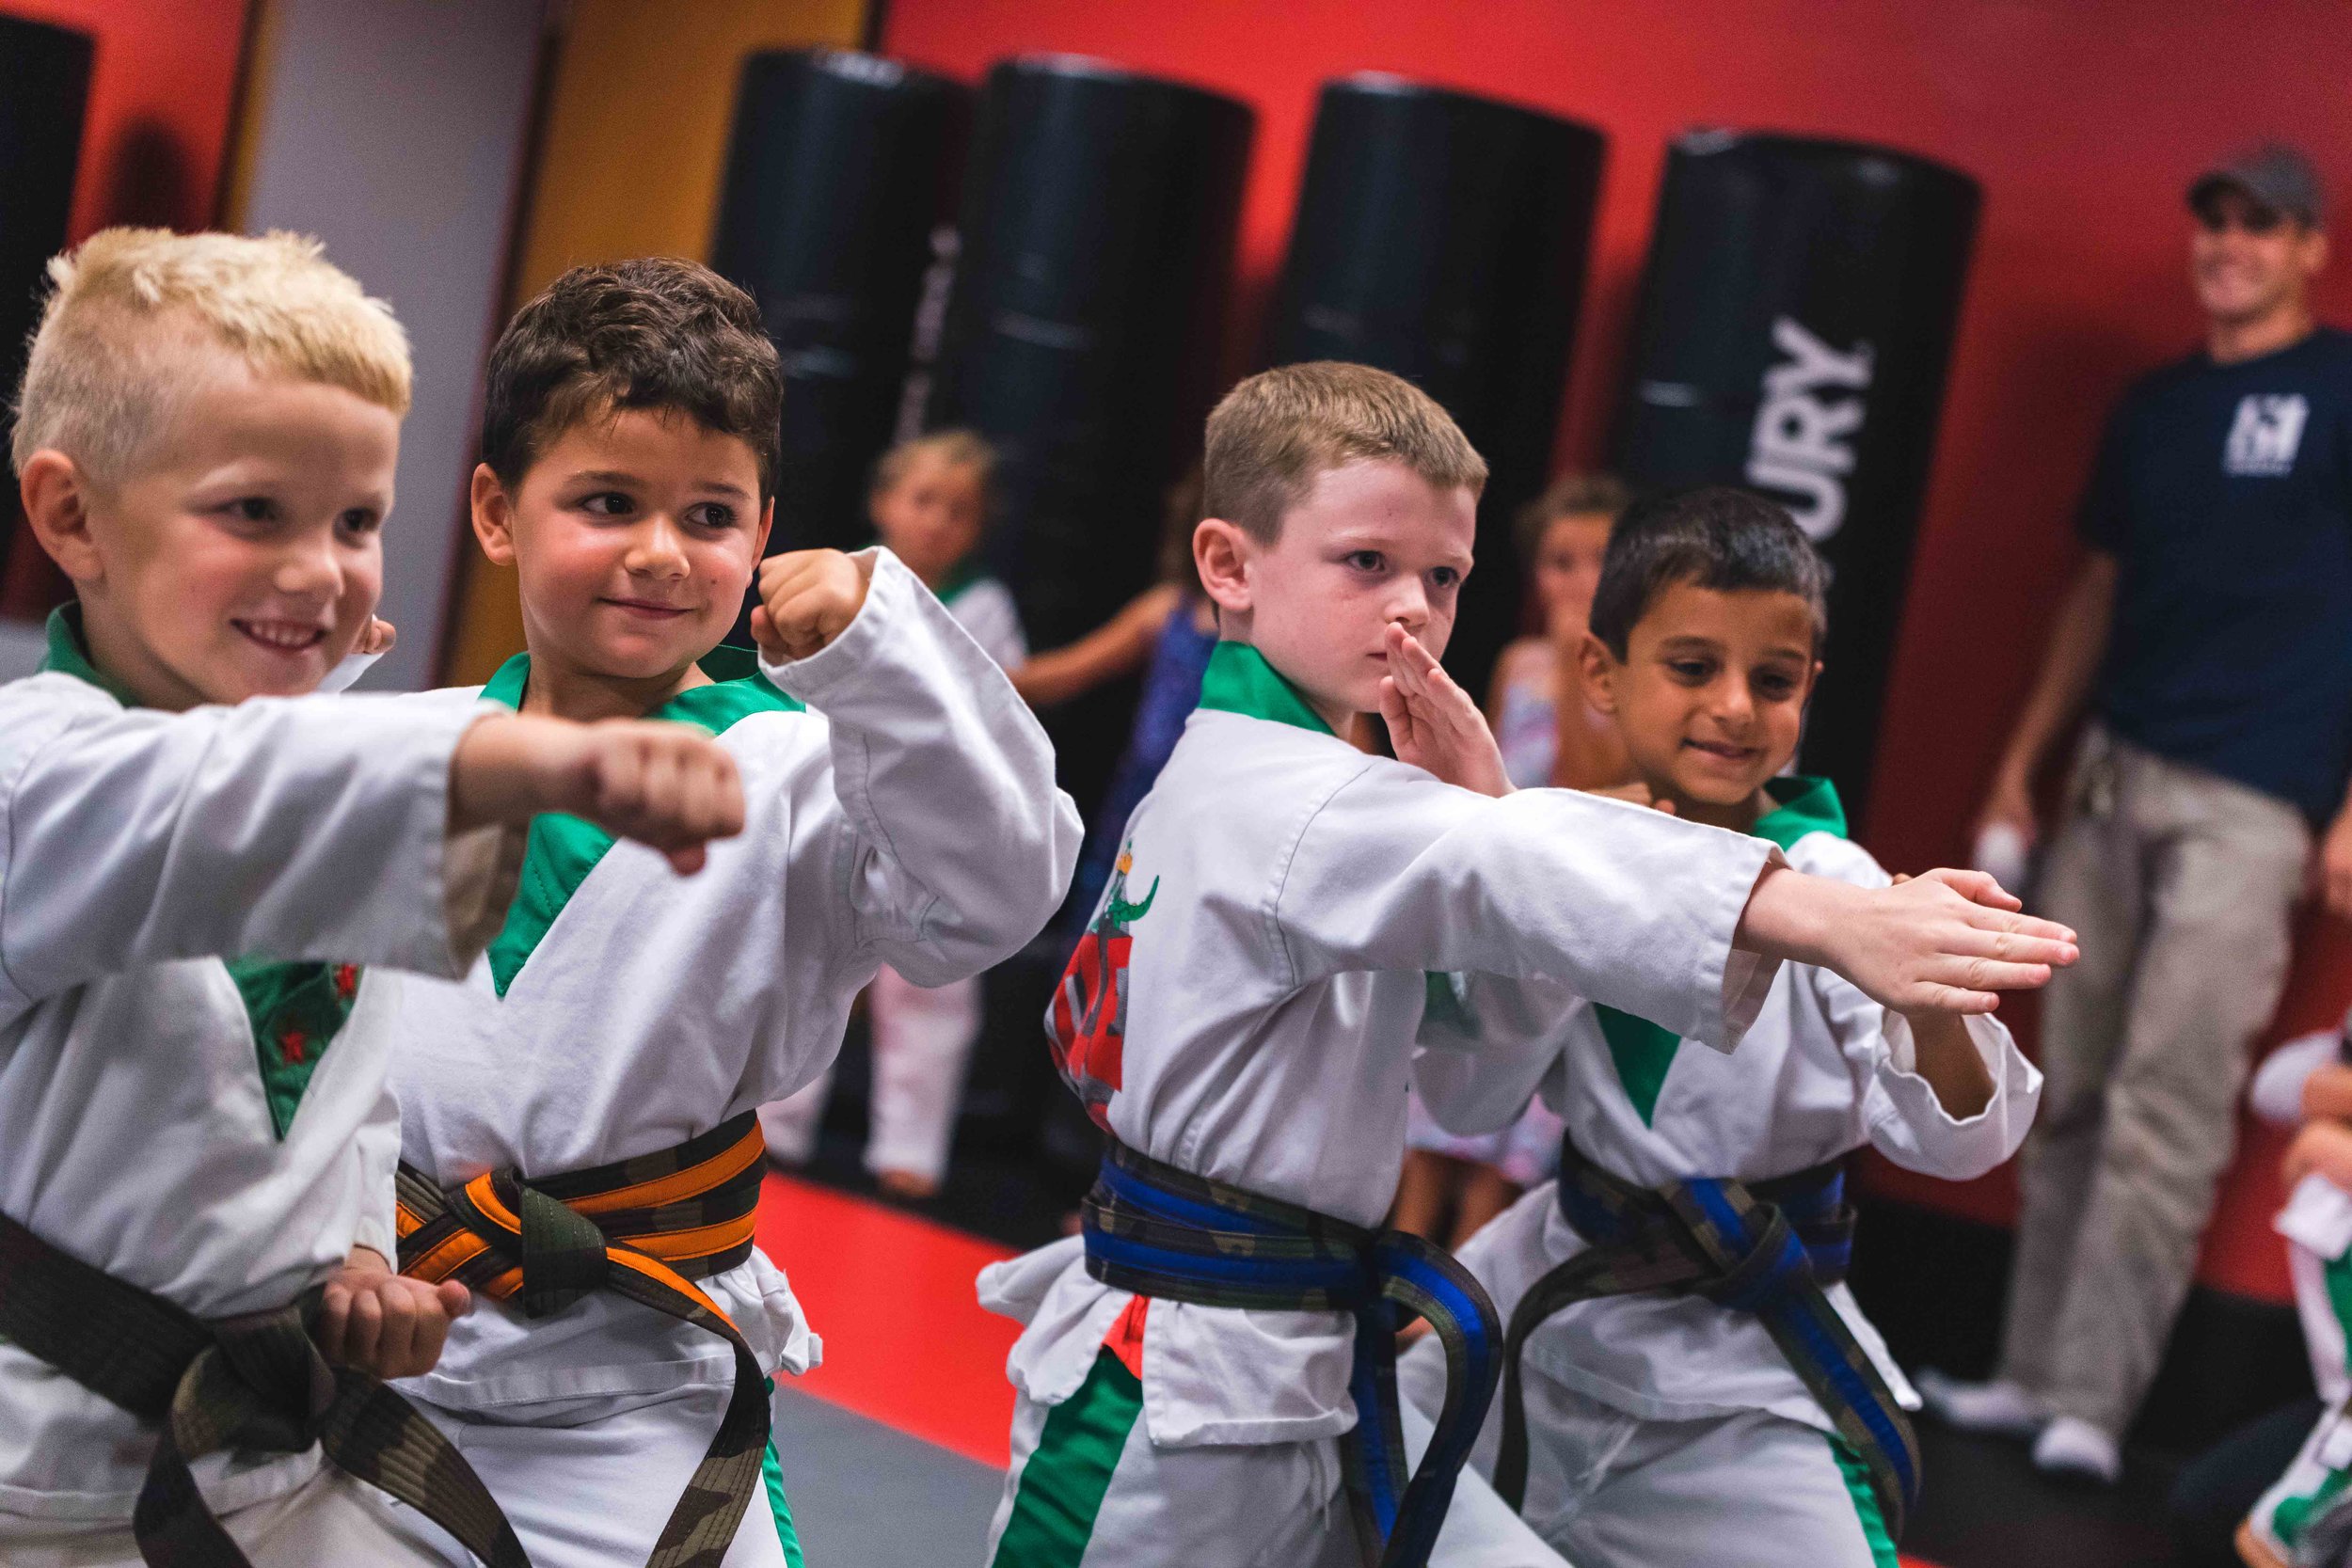 Karate Classes for Callahans Karate Martial Arts Classes for Preschool Kids Bedford MA.jpg